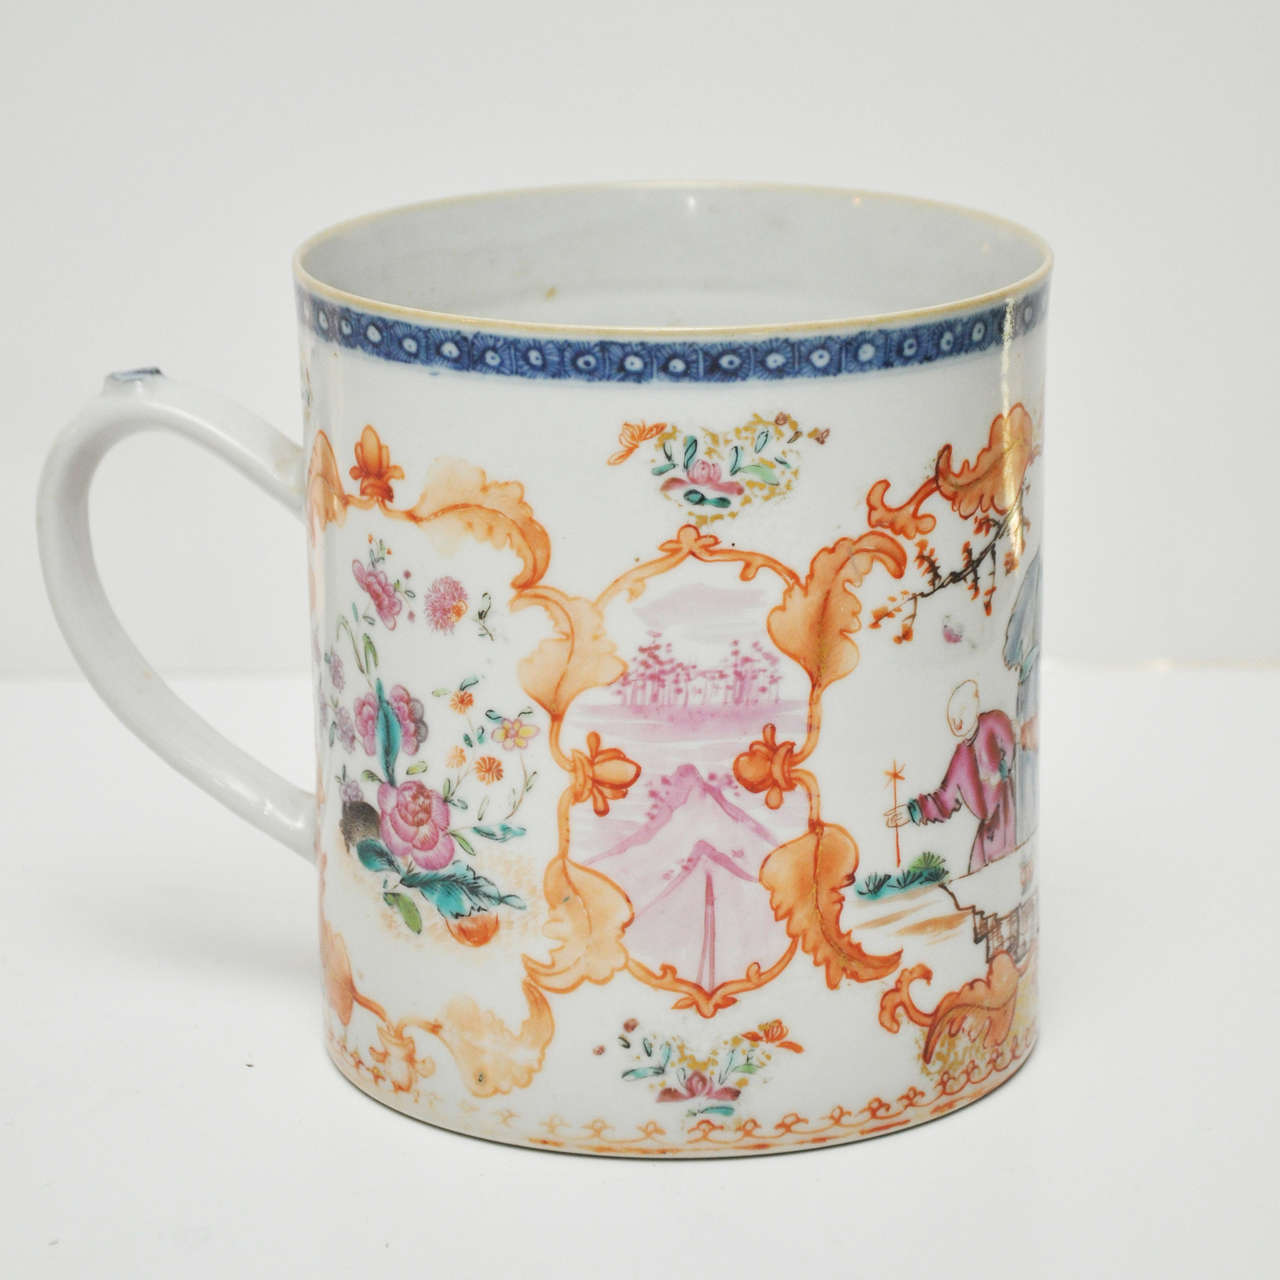 Large famille rose mug, China for the Western Trade, circa 1800.